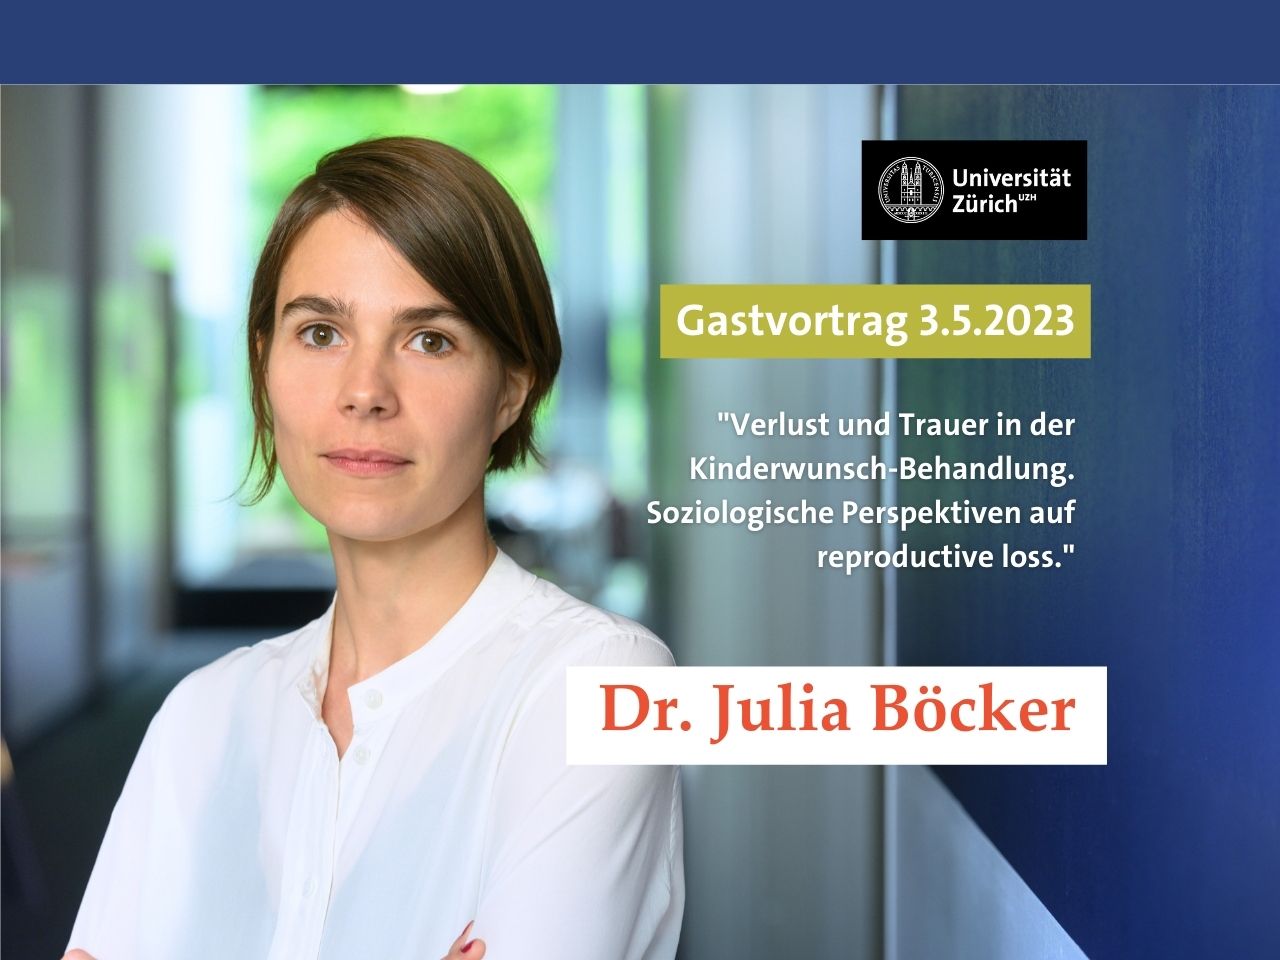 Julia Böcker reproductive loss assisted fertility